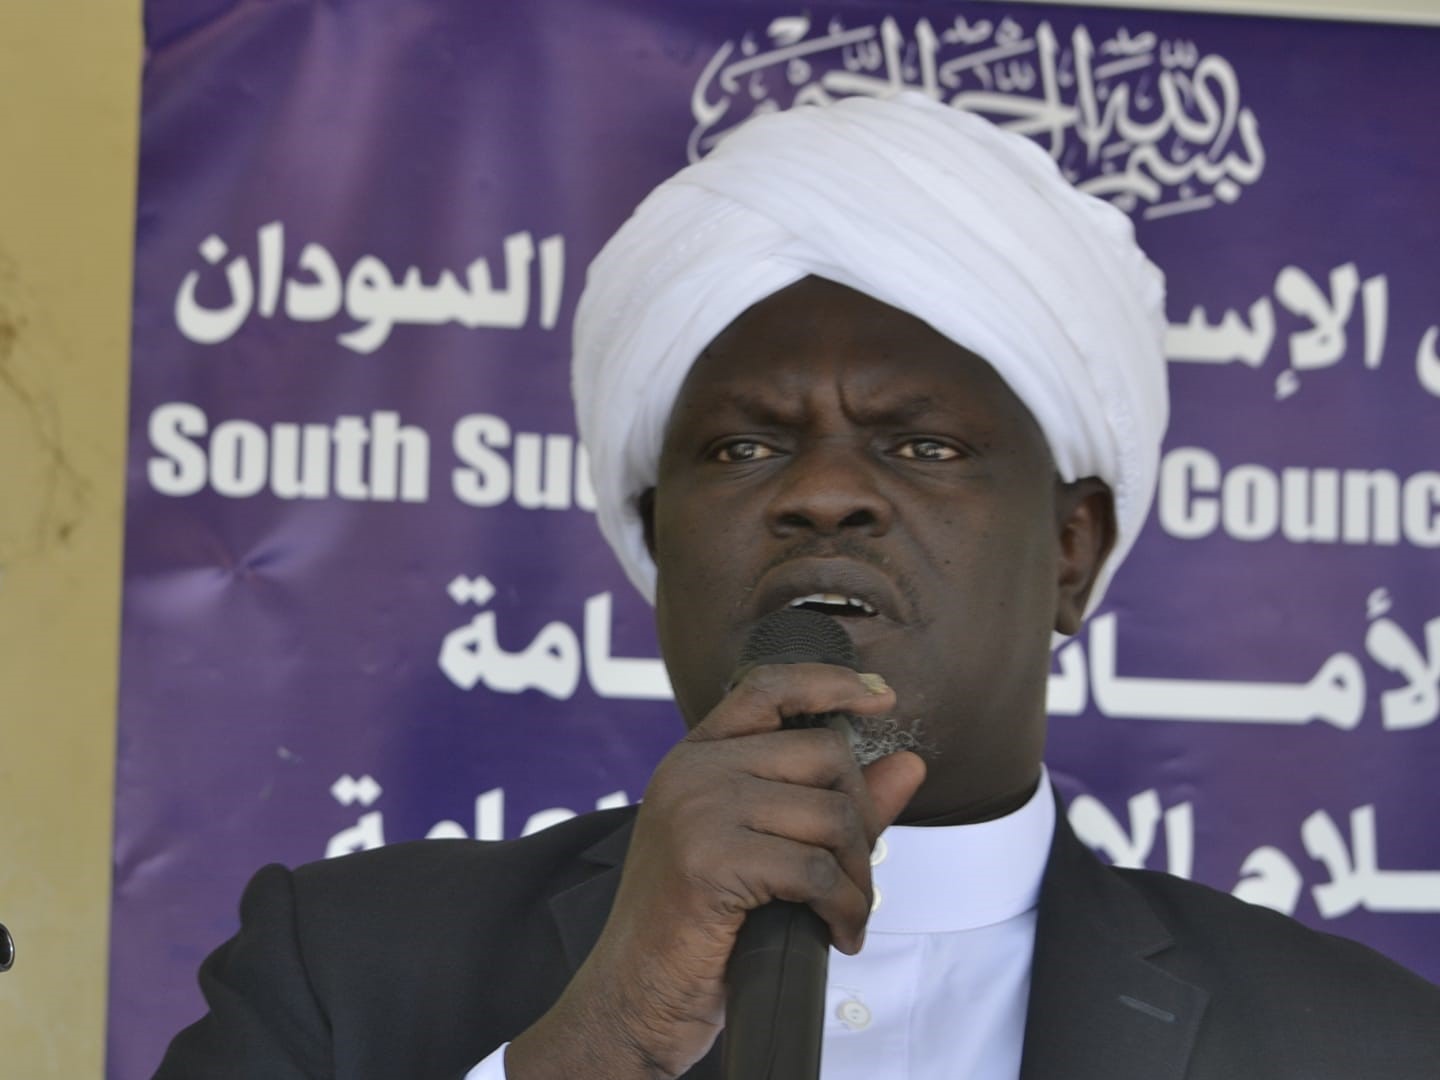 Cleric urges peace in South Sudan as Ramadan starts